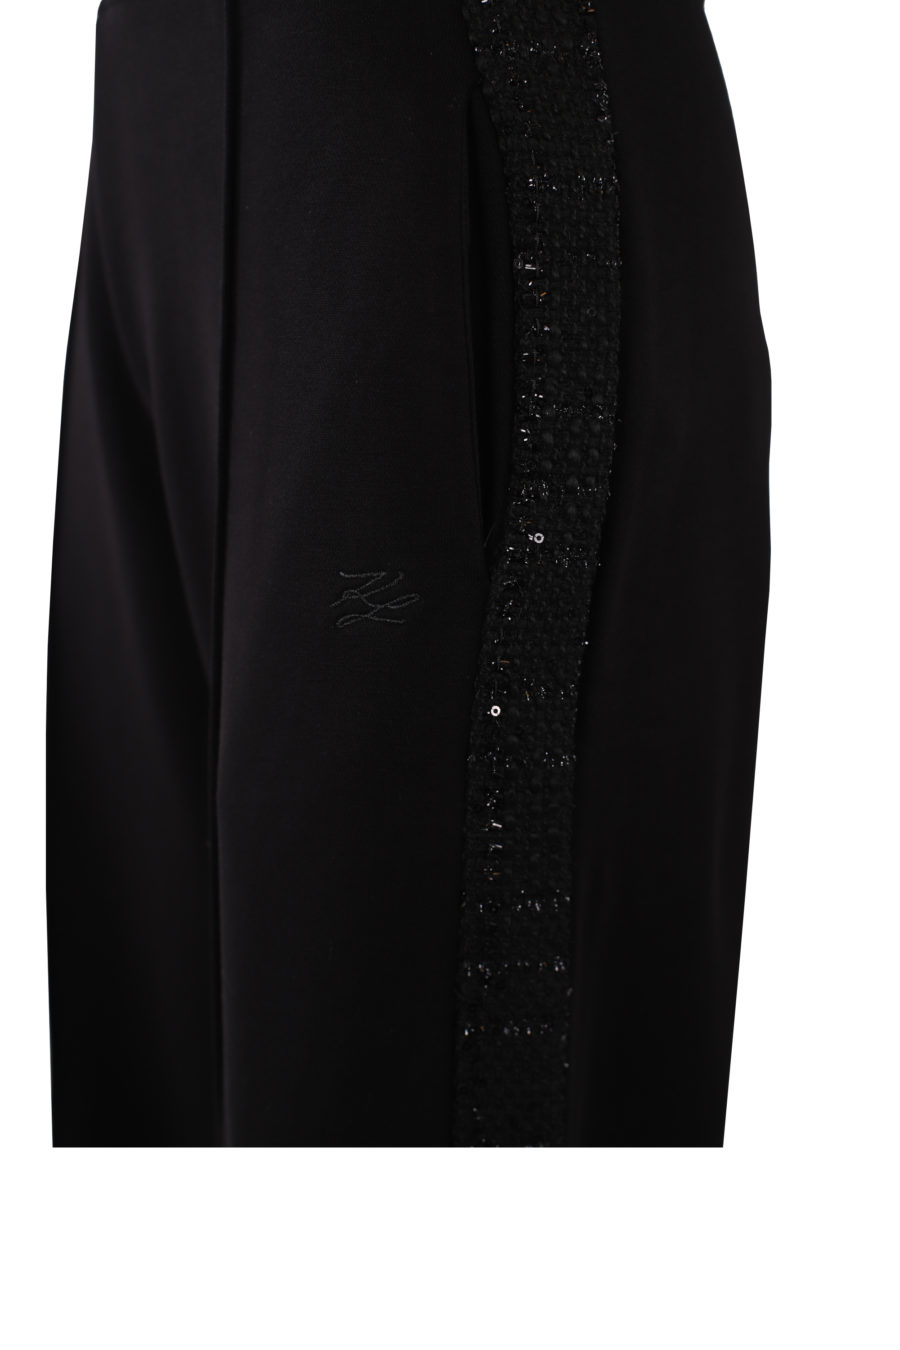 Pantalon noir avec ruban bouclé - IMG 0377